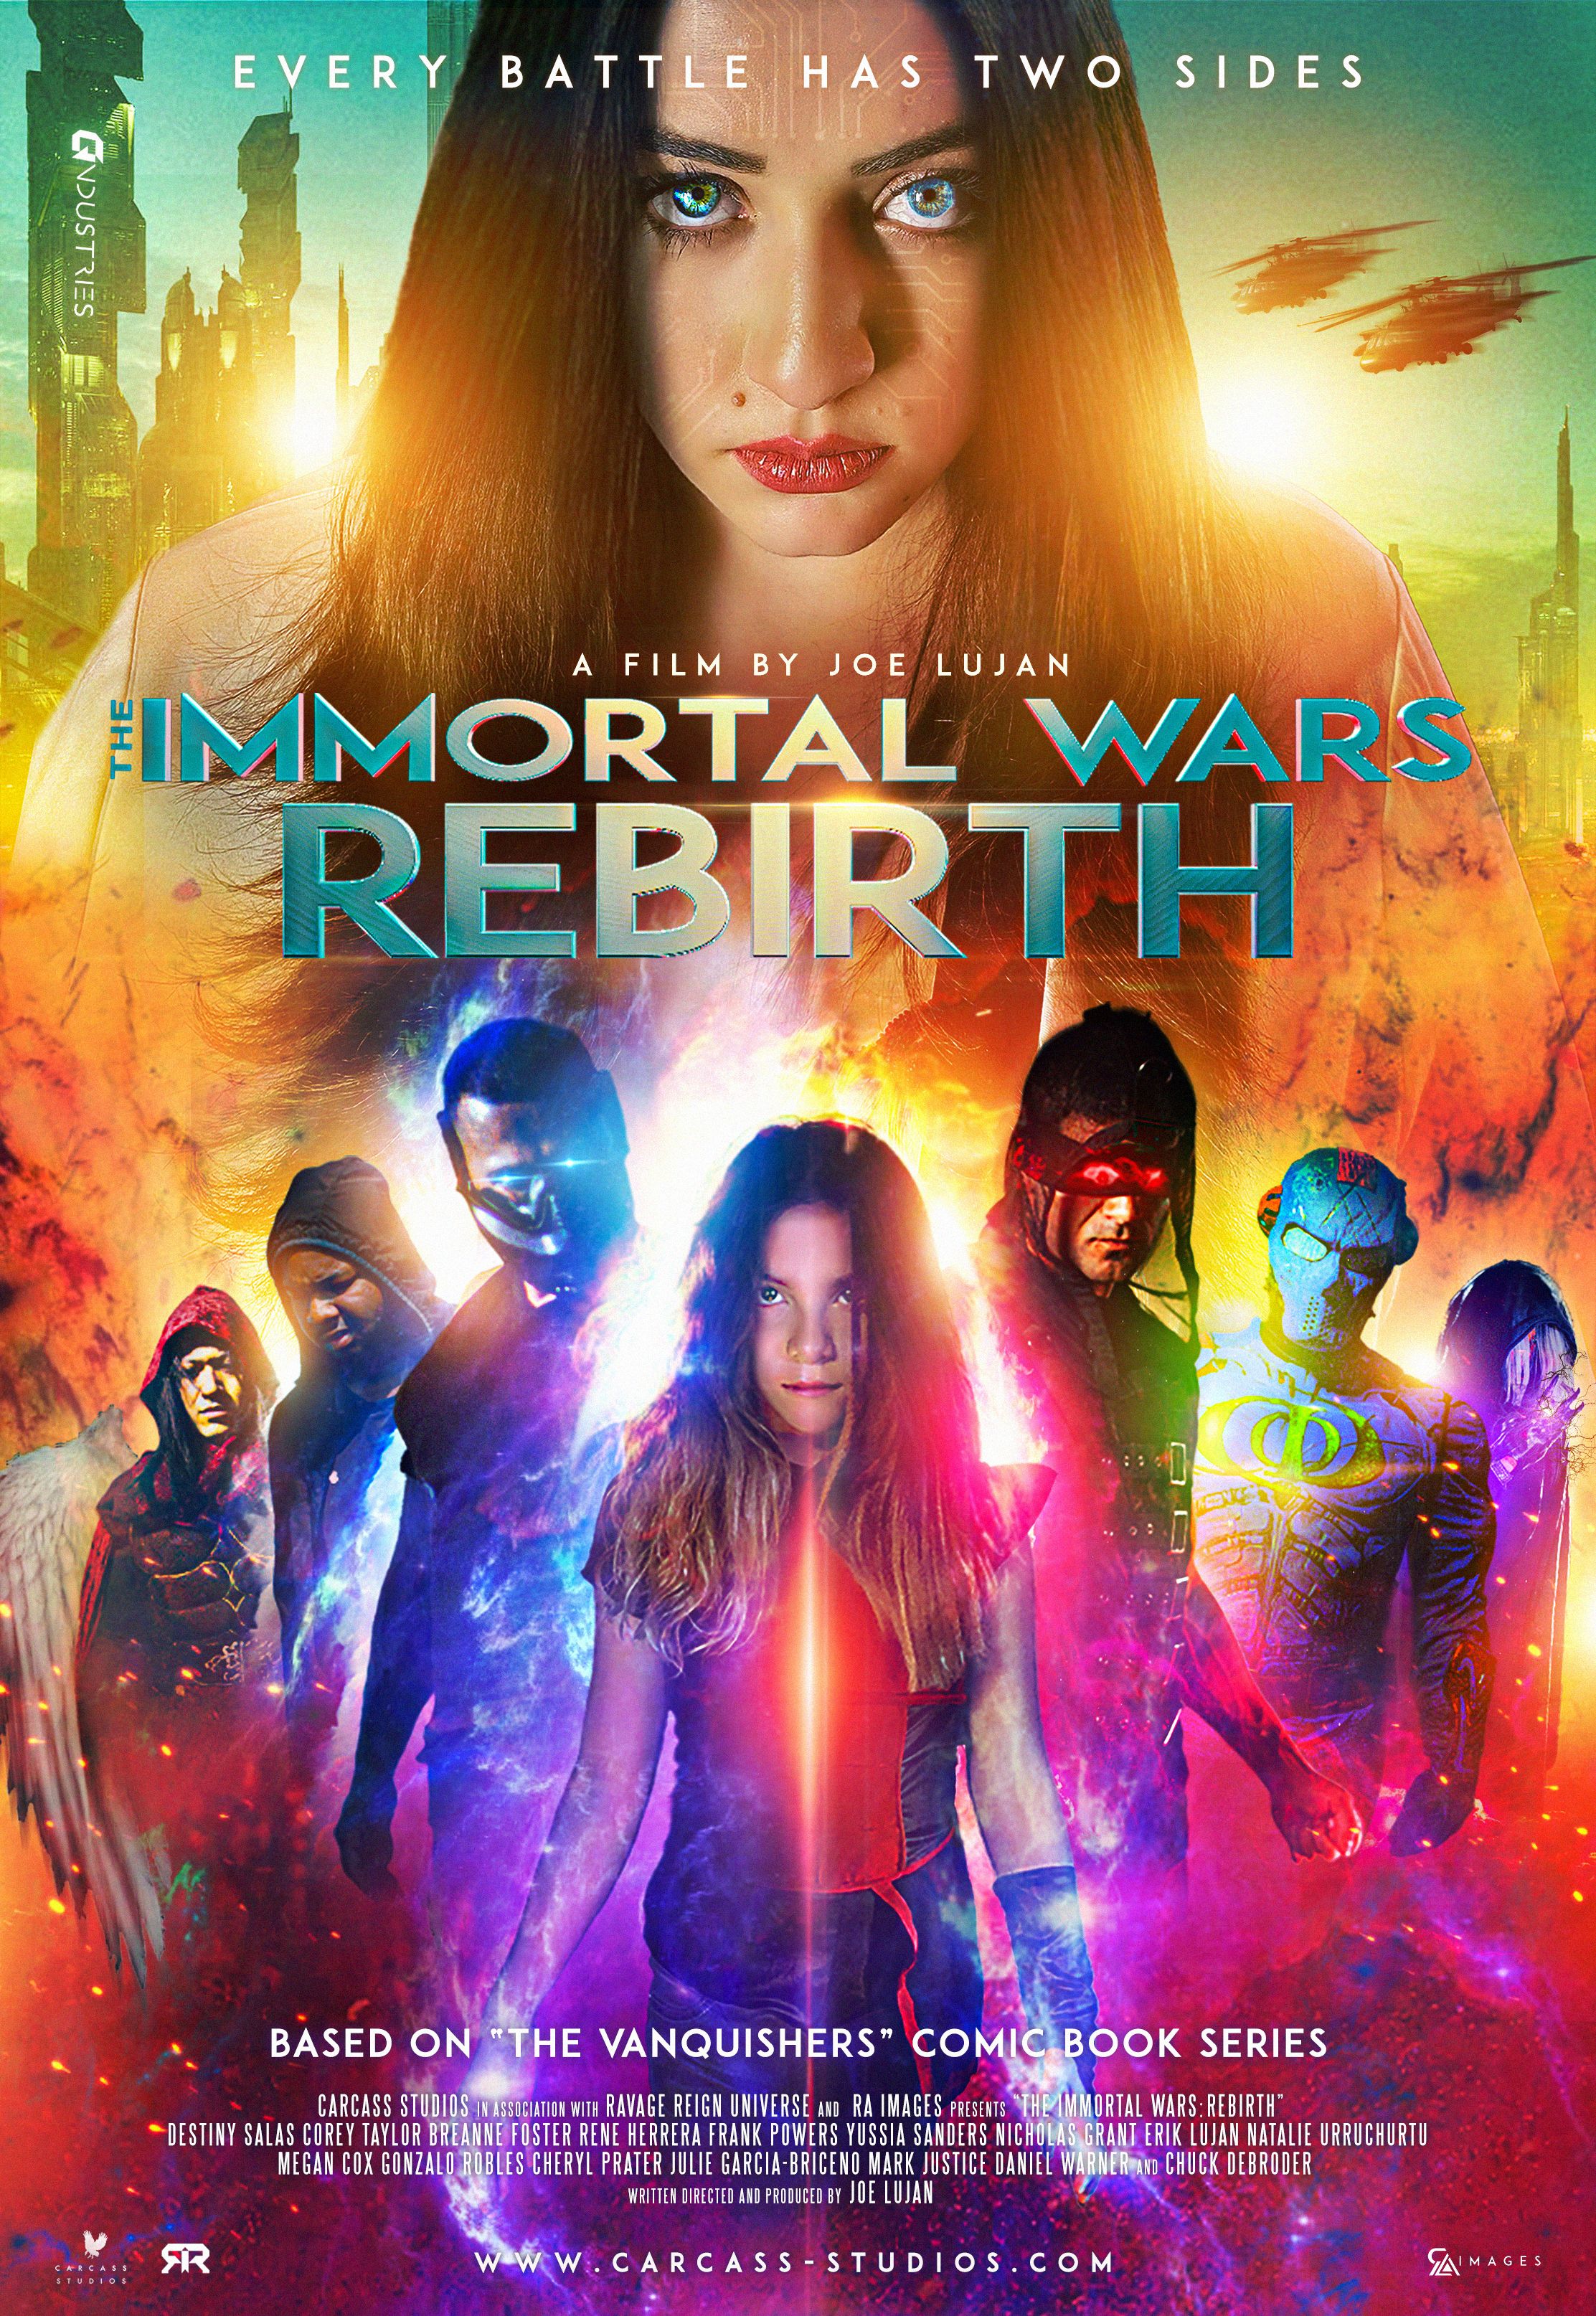 The Immortal Wars - Rebirth (2020) Hindi Dubbed WEB-DL download full movie